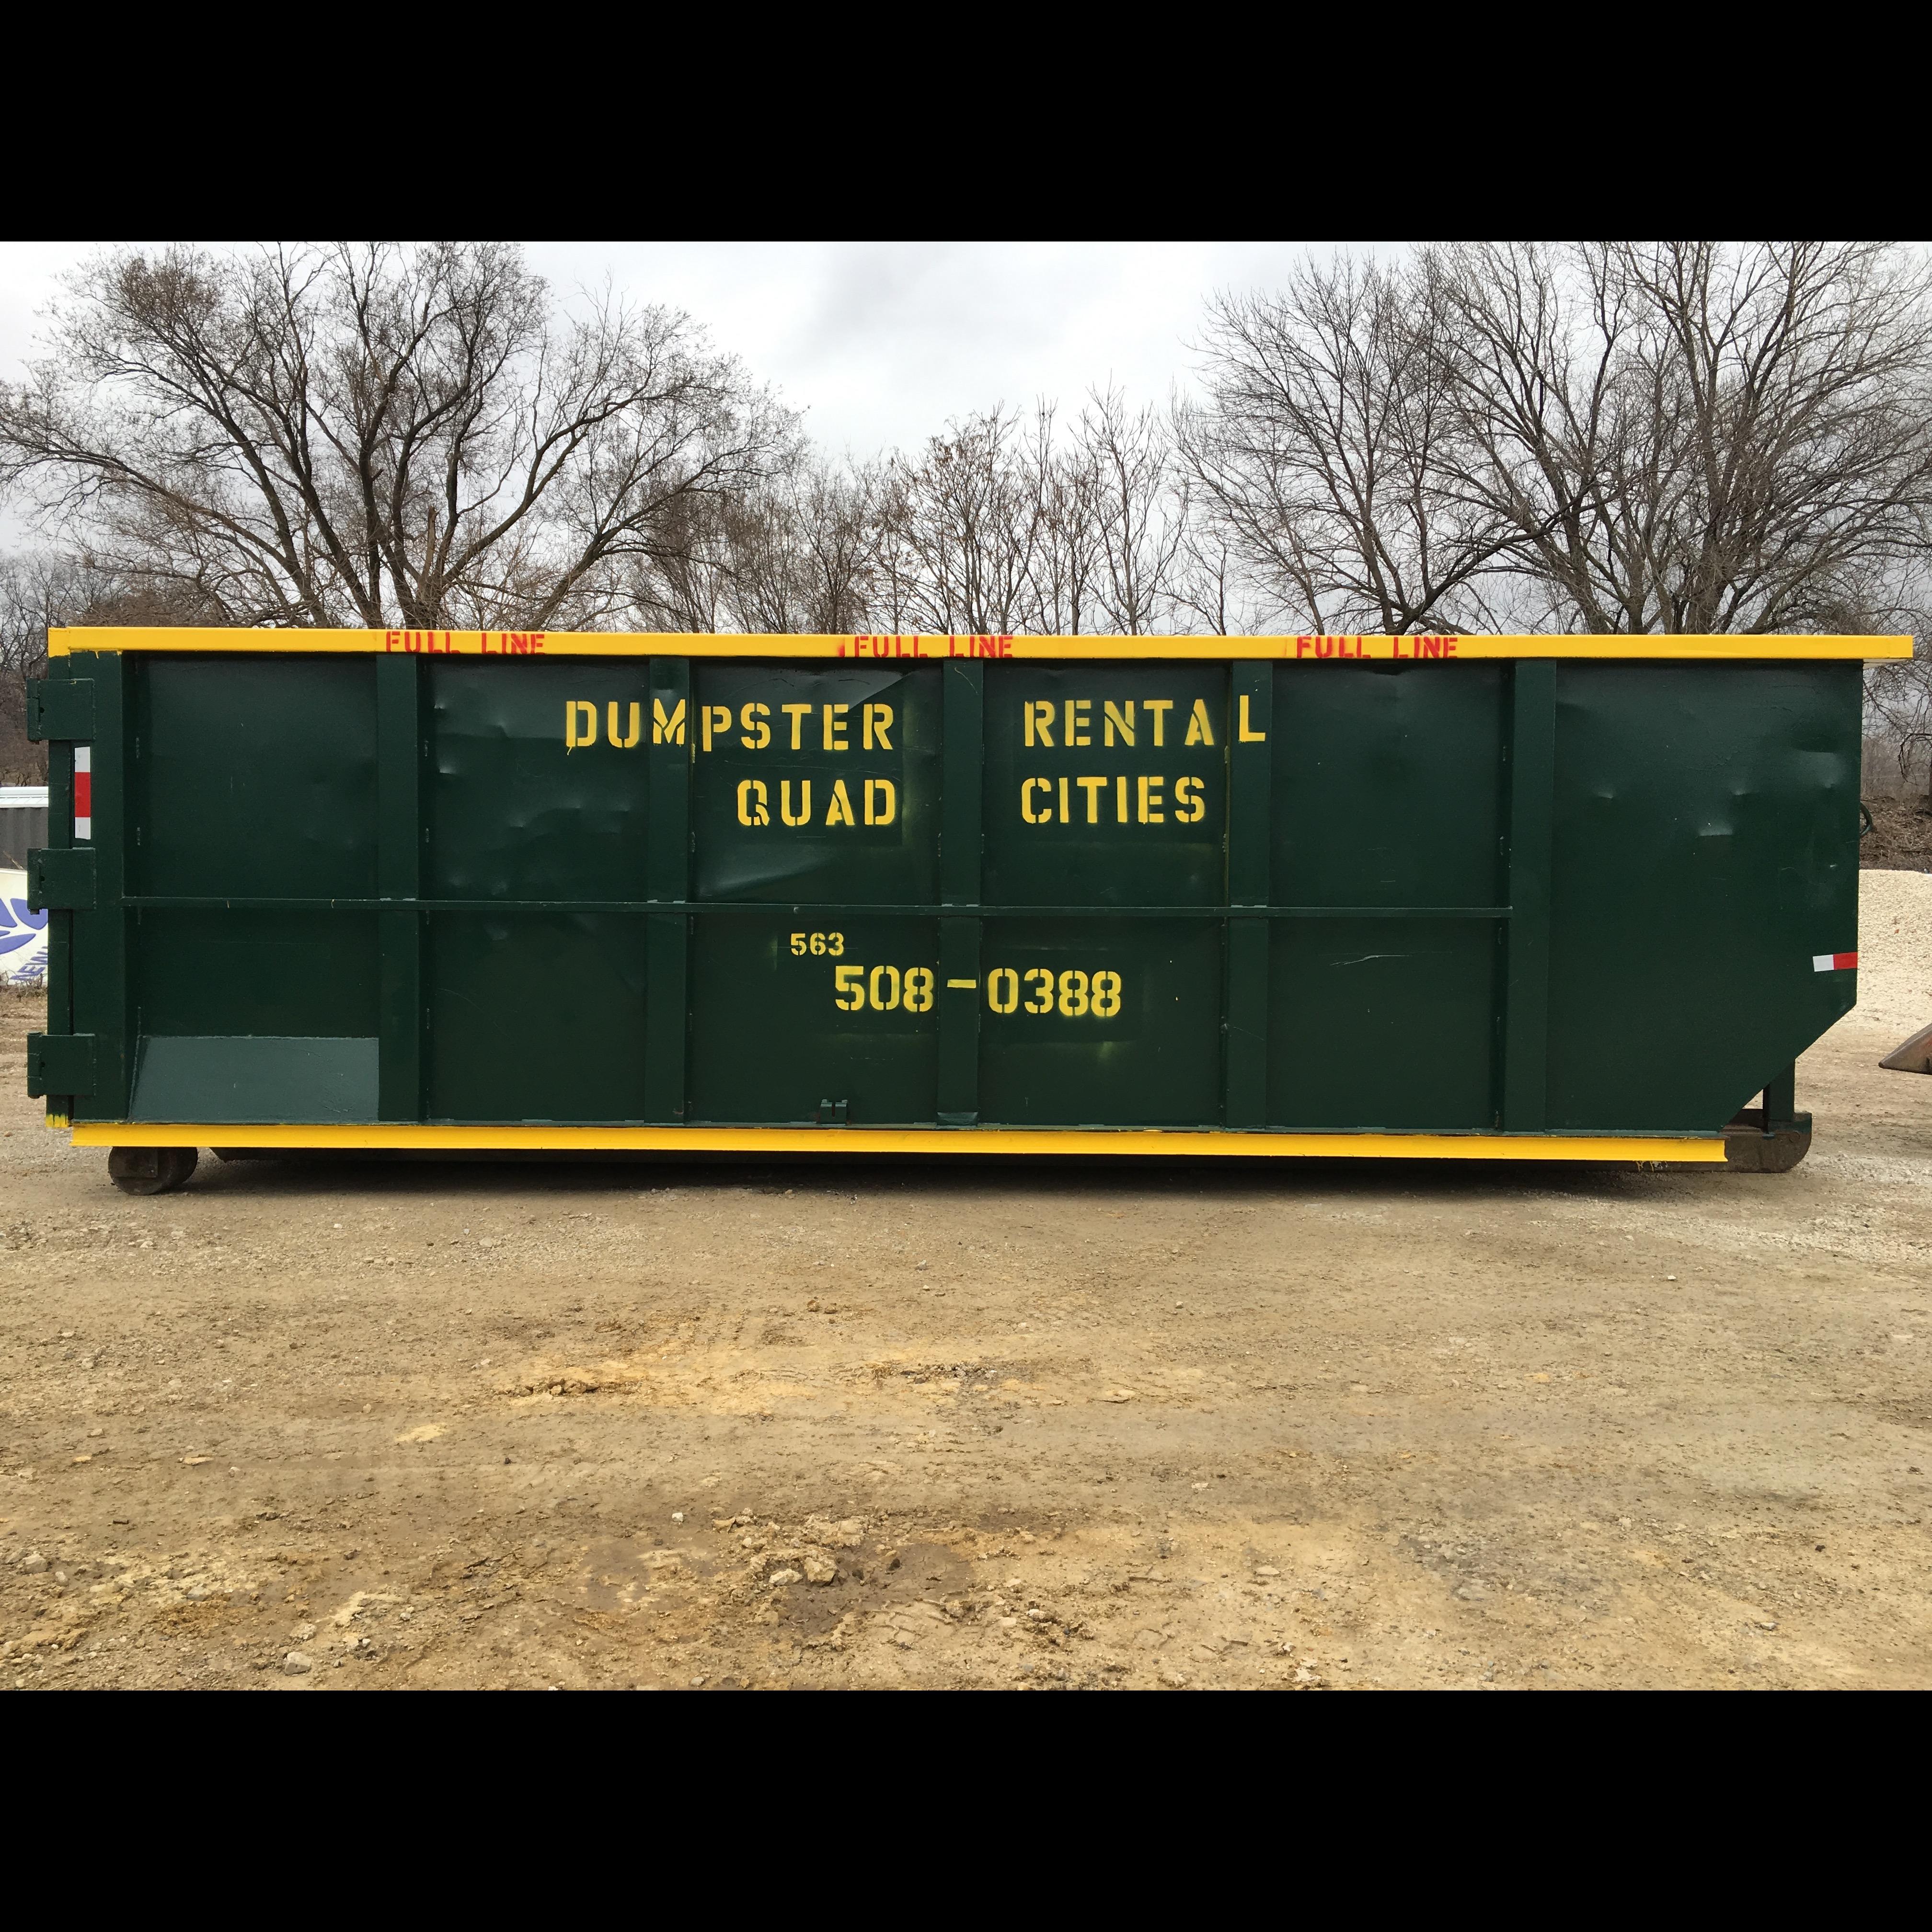 Dumpster Rental Quad Cities Logo